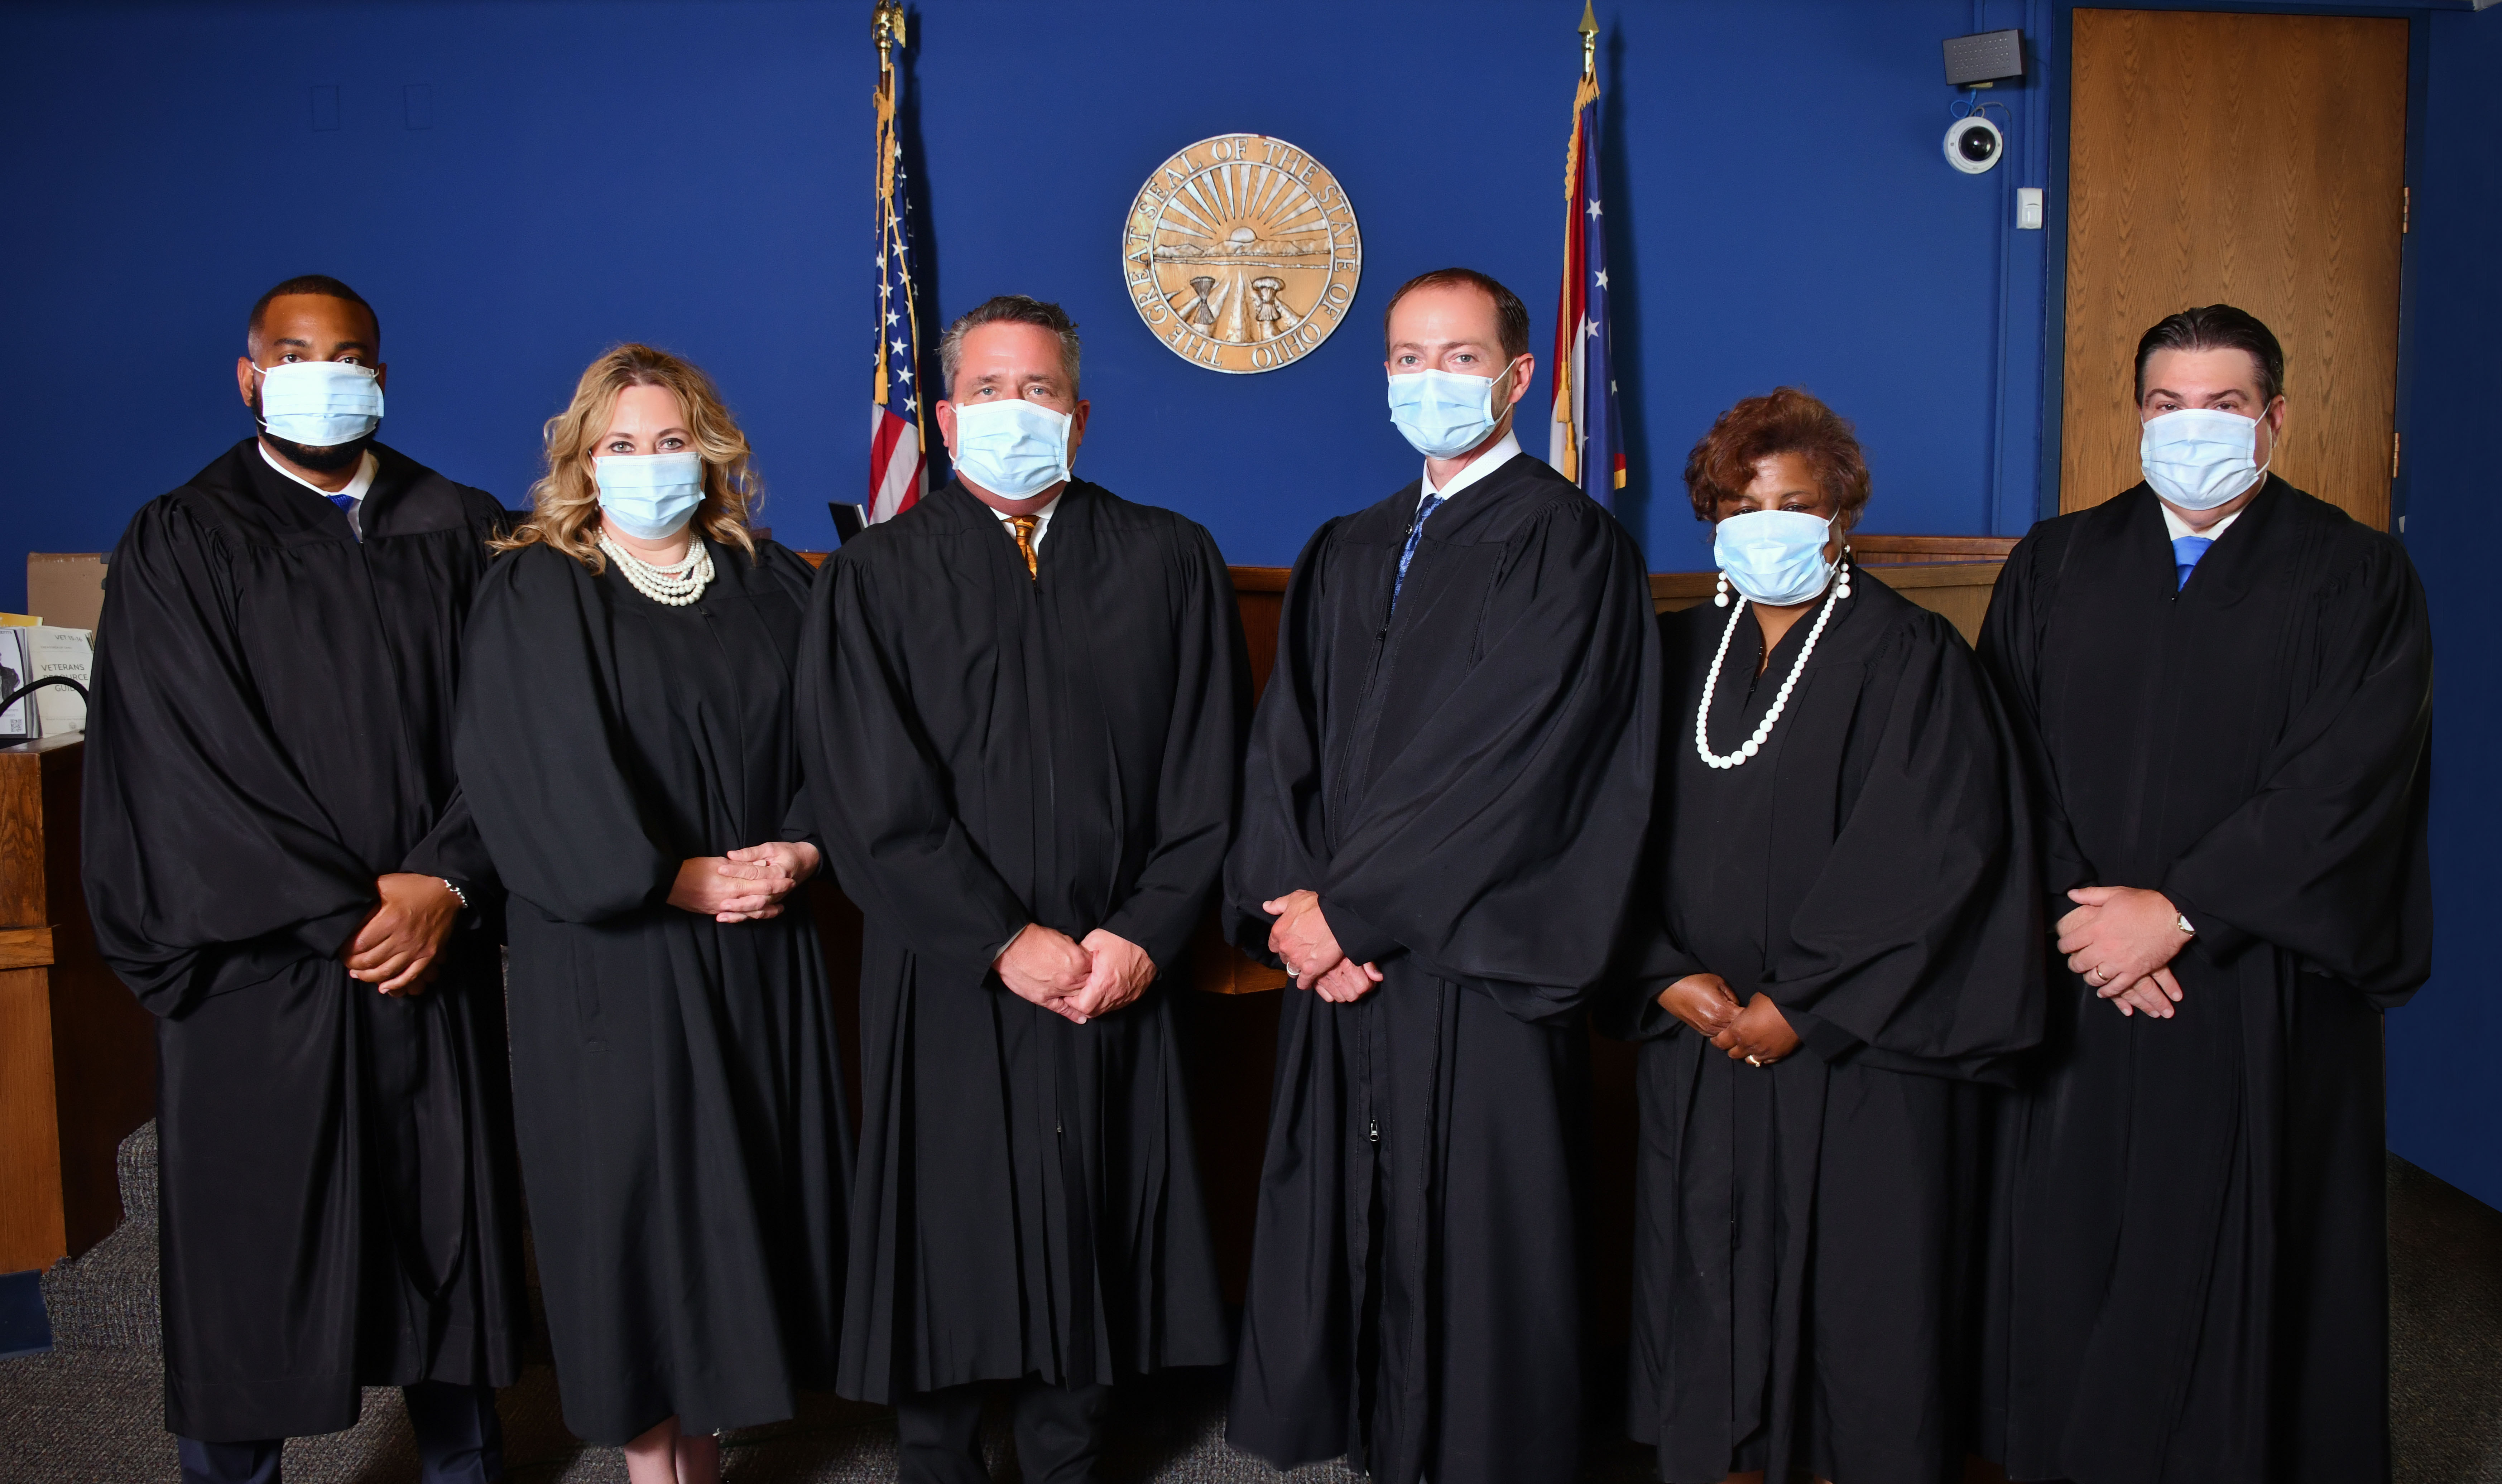 Akron Municipal Court Judges with Masks